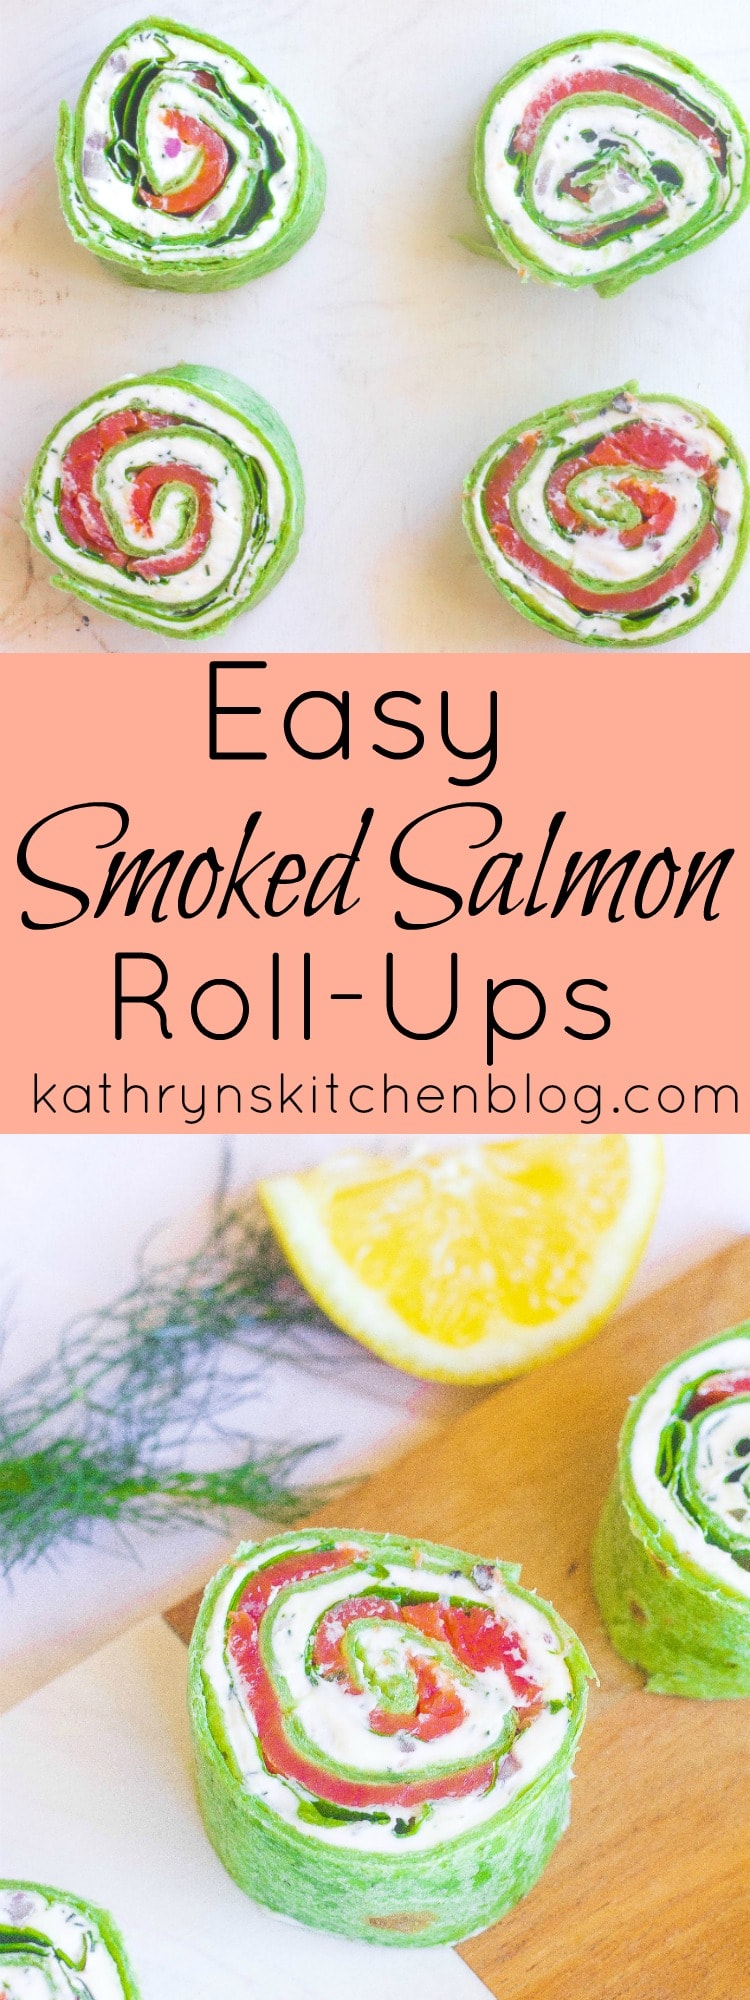 Easy Smoked Salmon Roll-Ups